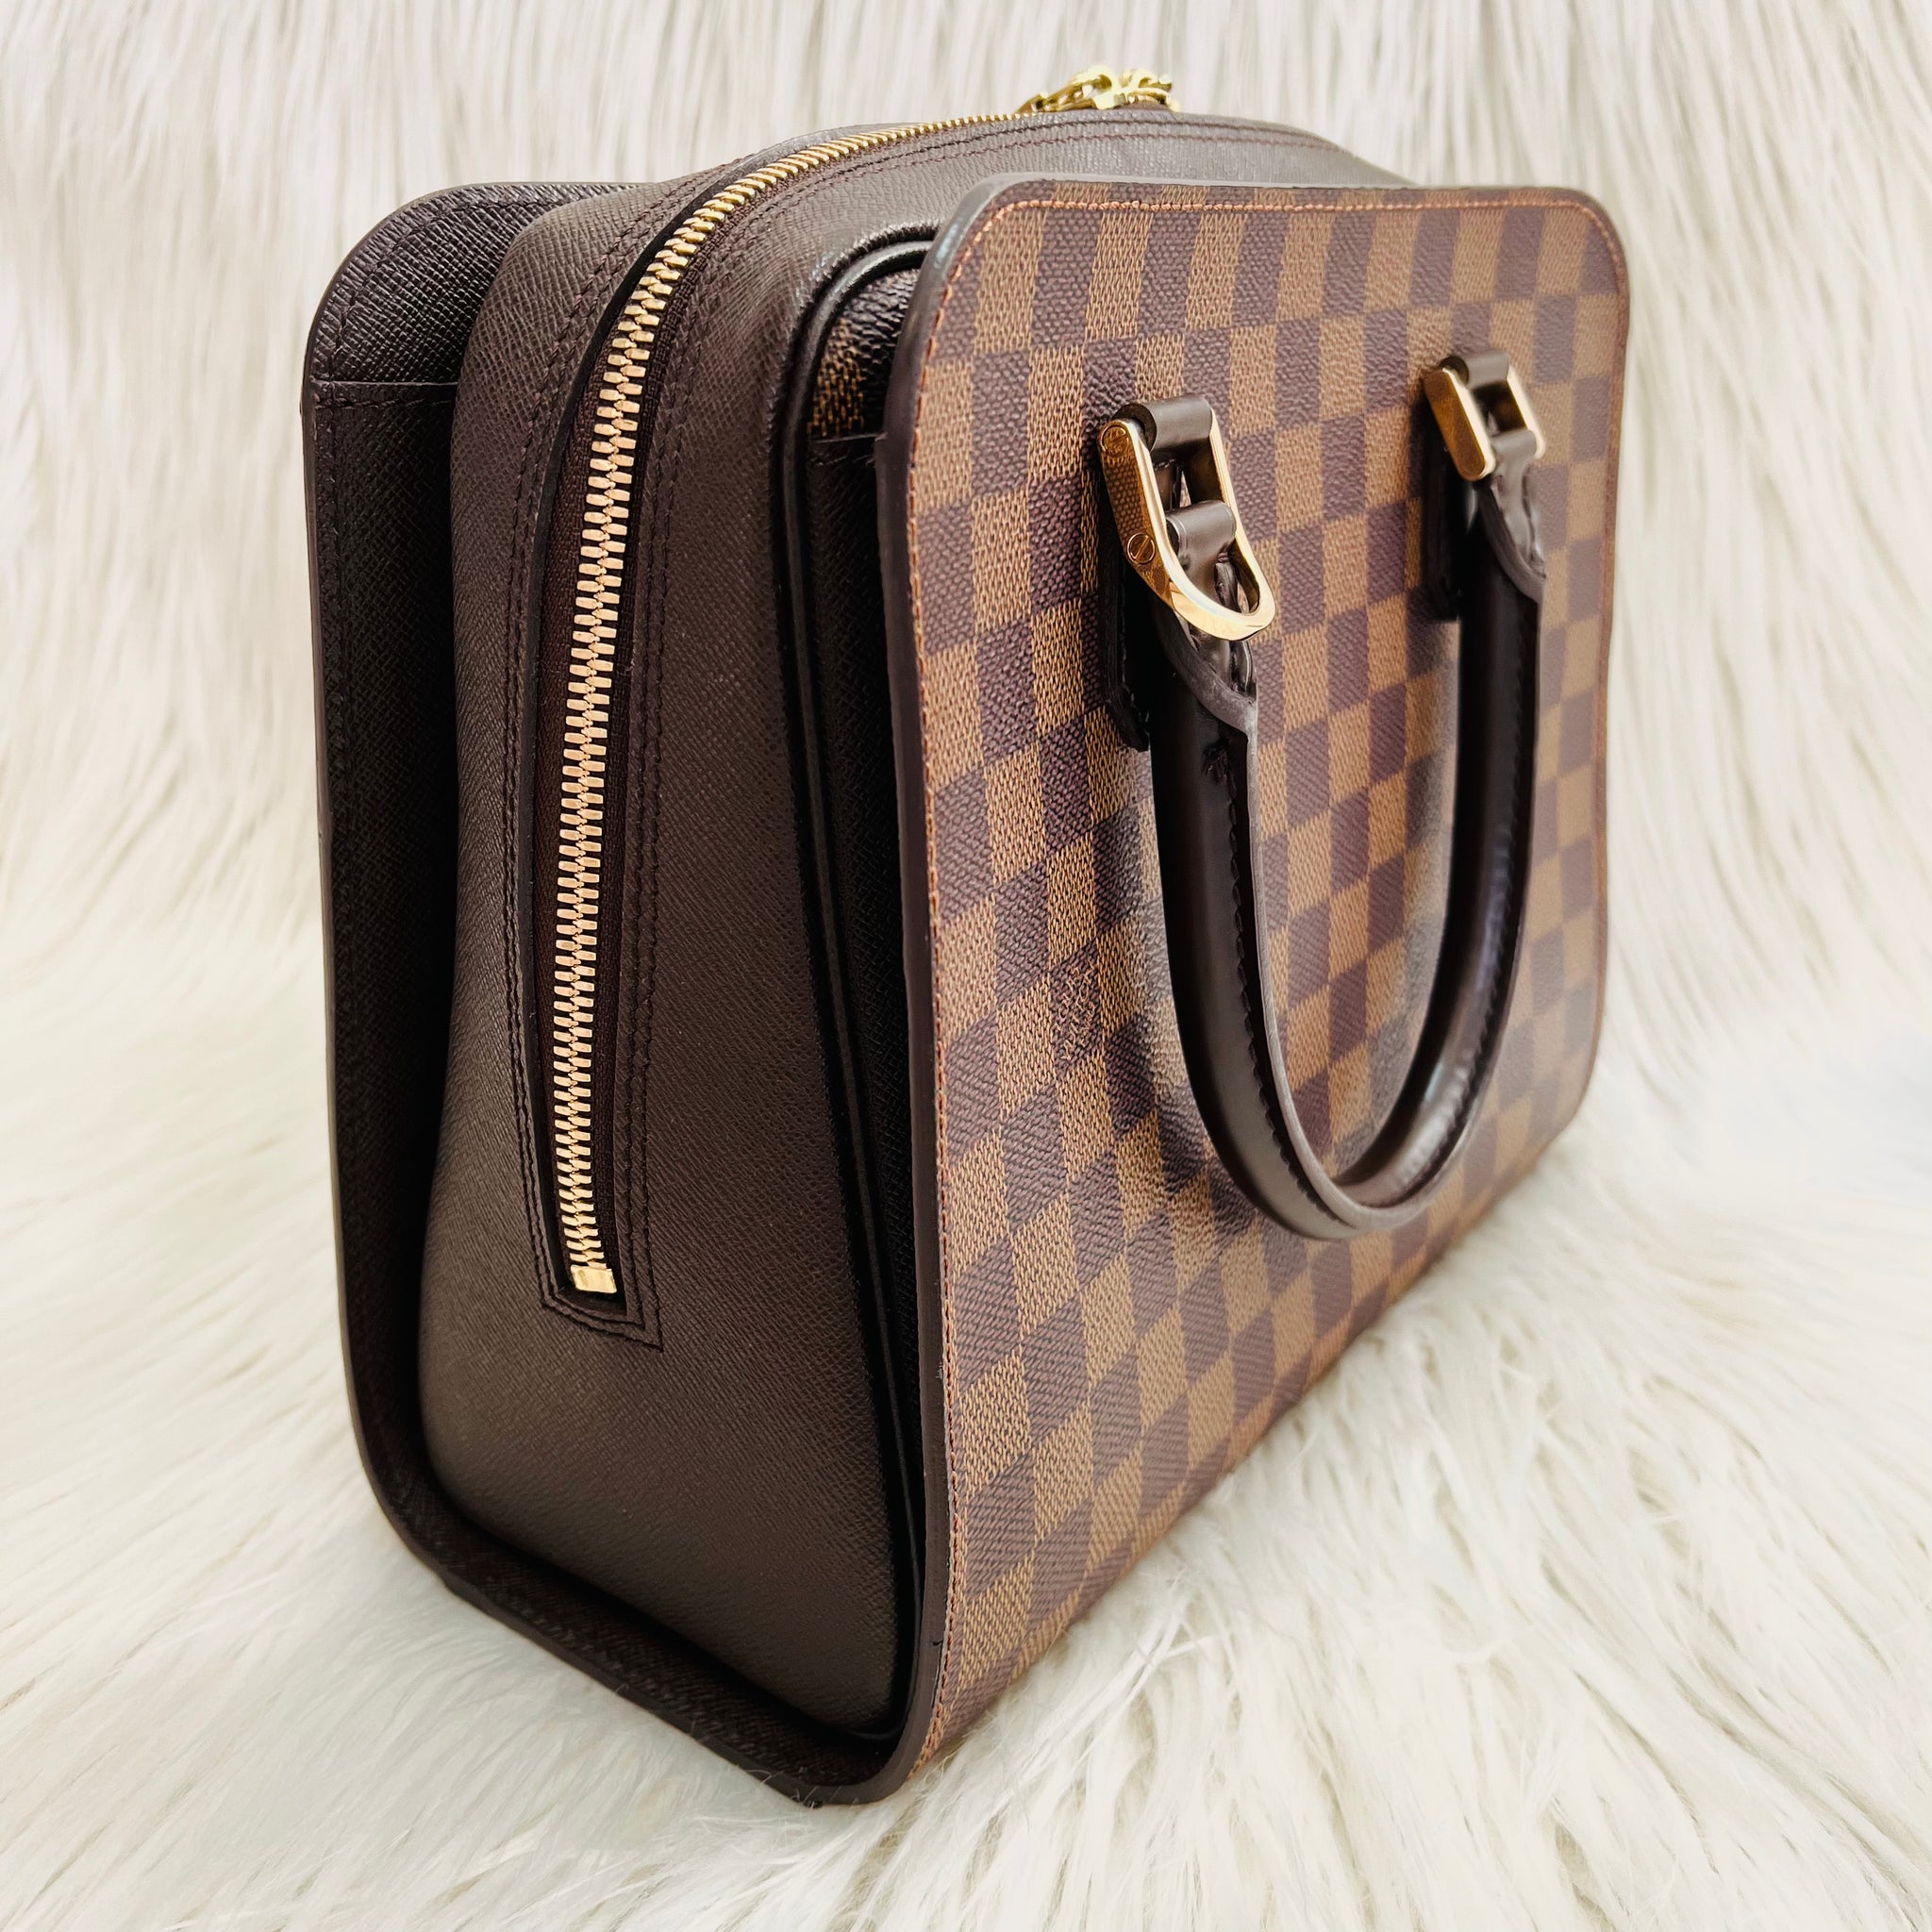 Louis Vuitton Louis Vuitton Triana Damier Canvas Handbag